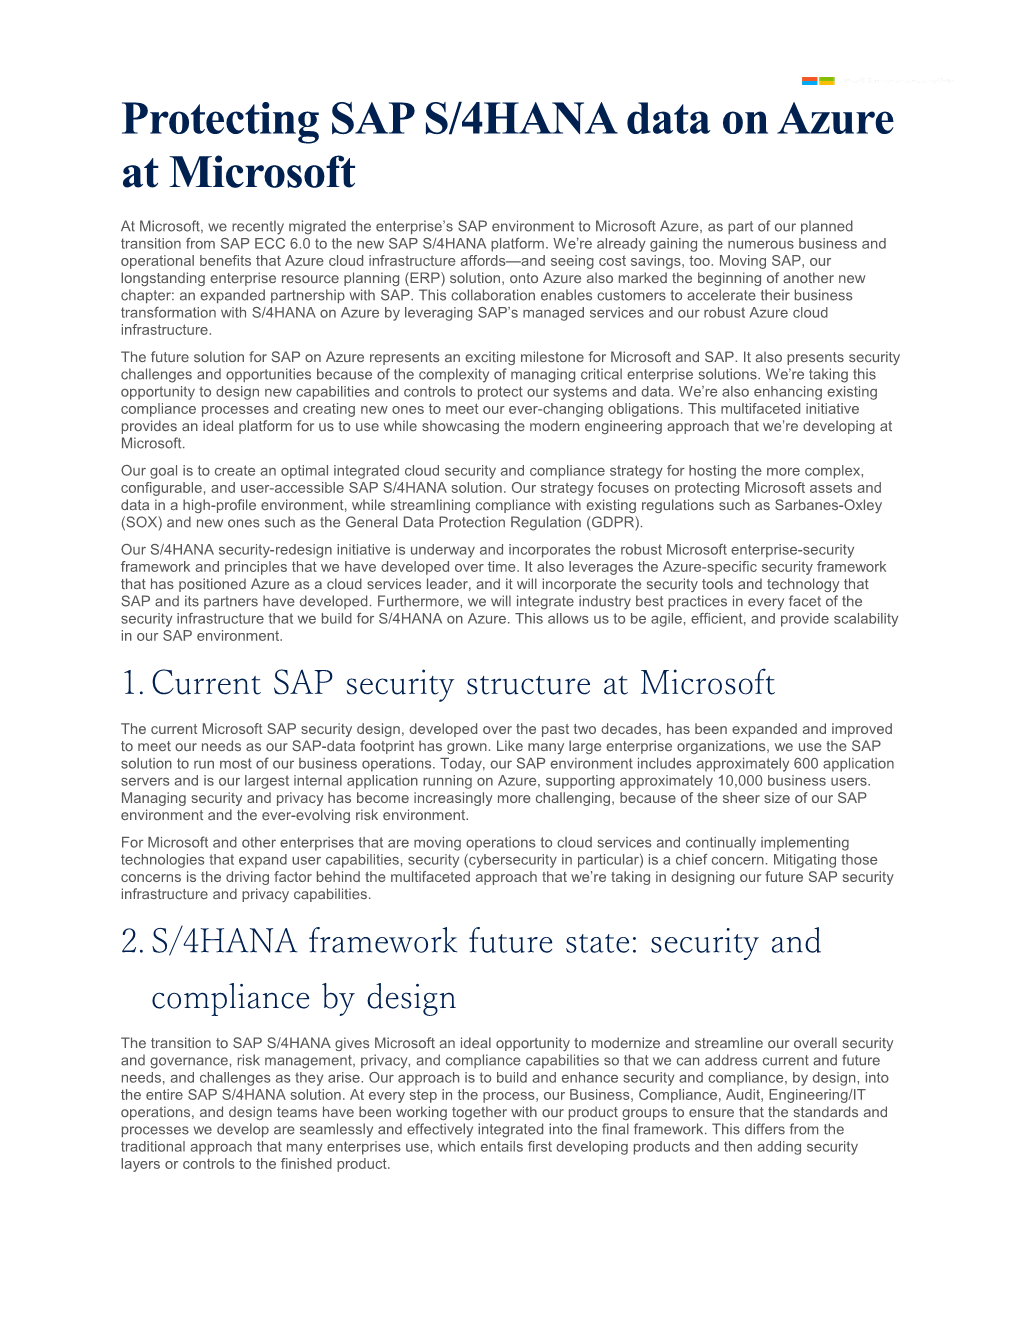 Page 1 Protecting SAP S/4HANA Data on Azure at Microsoft